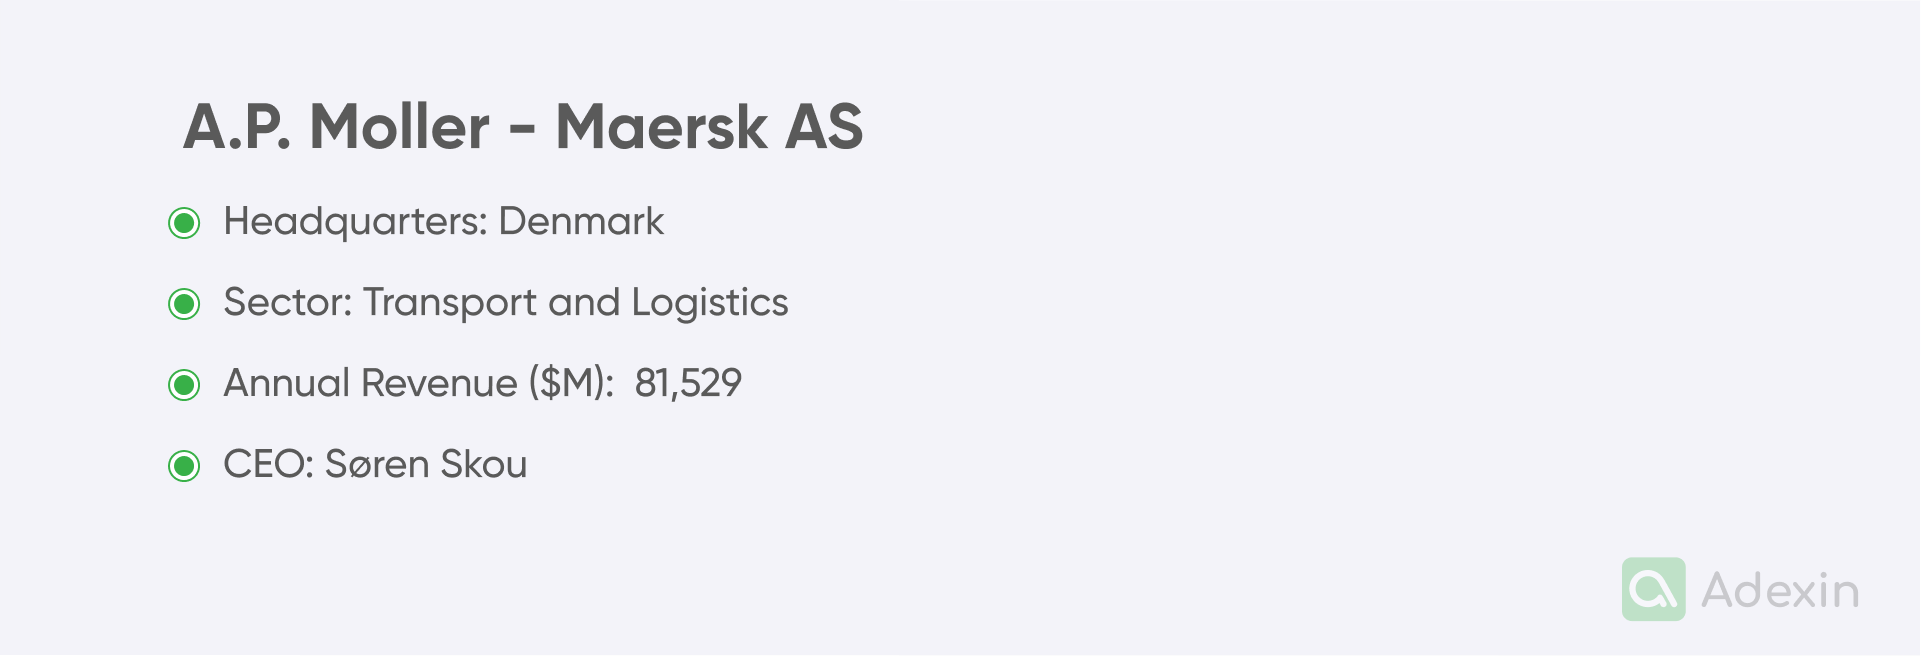 A.P. Moller - Maersk AS basic data